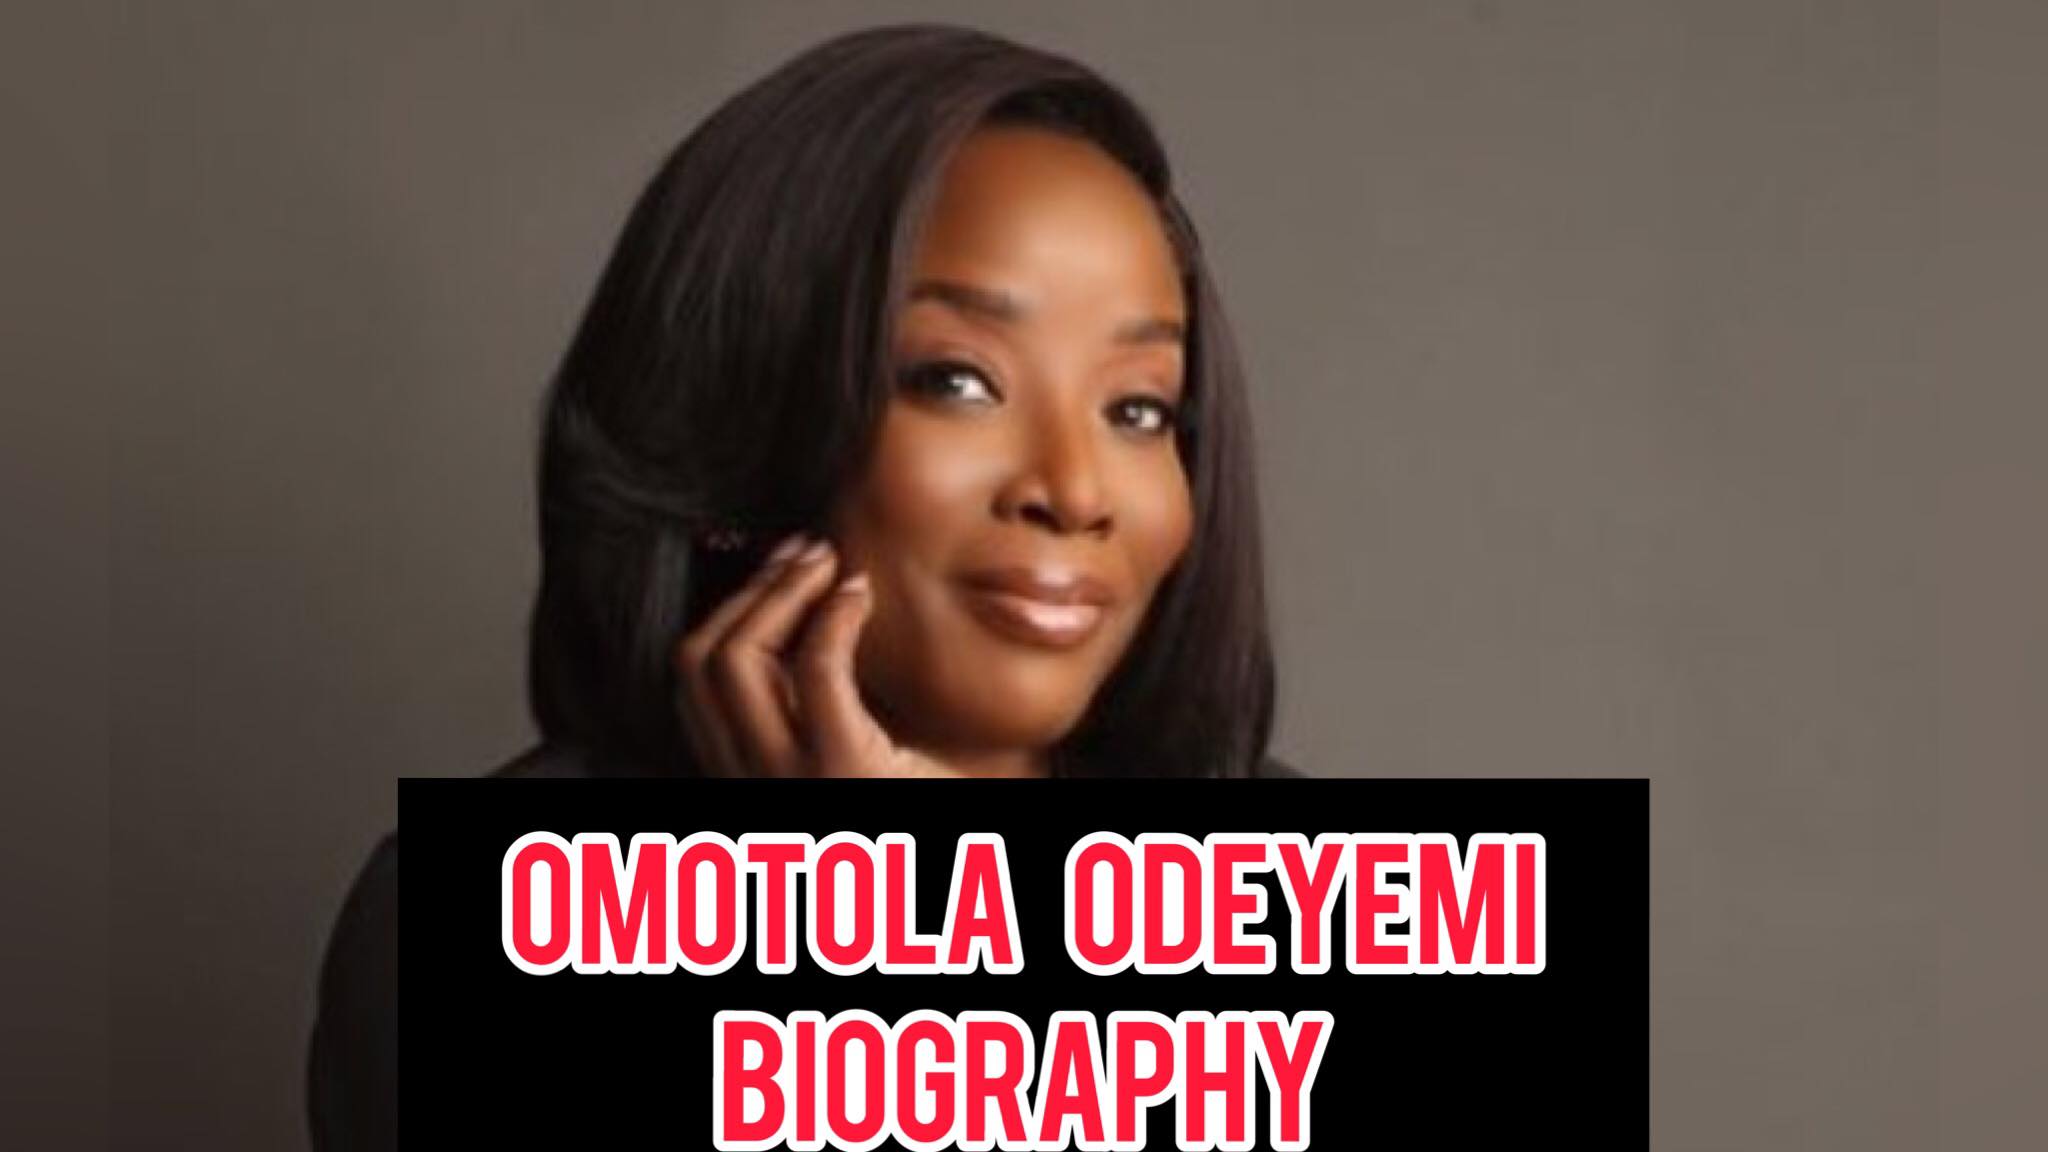 Tola Odeyemi Biography